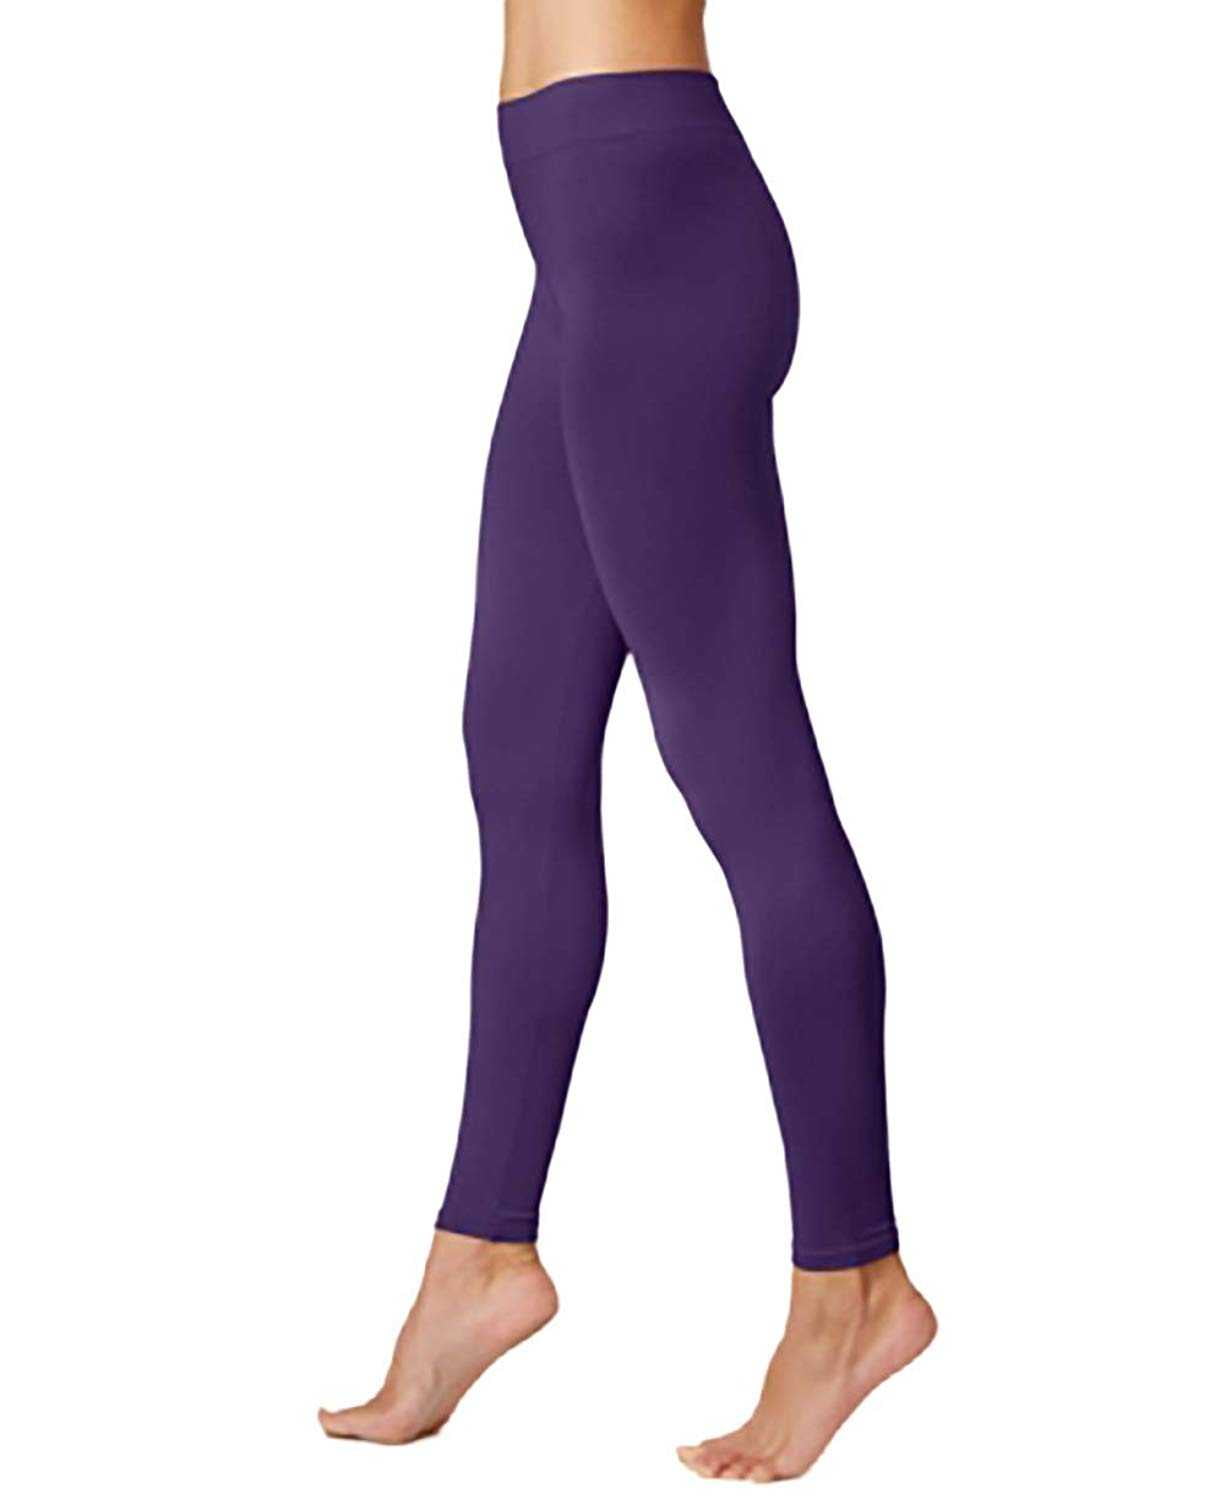 Hue First Look Seamless Fashion Leggings Pants Aubergine Purple S-M 